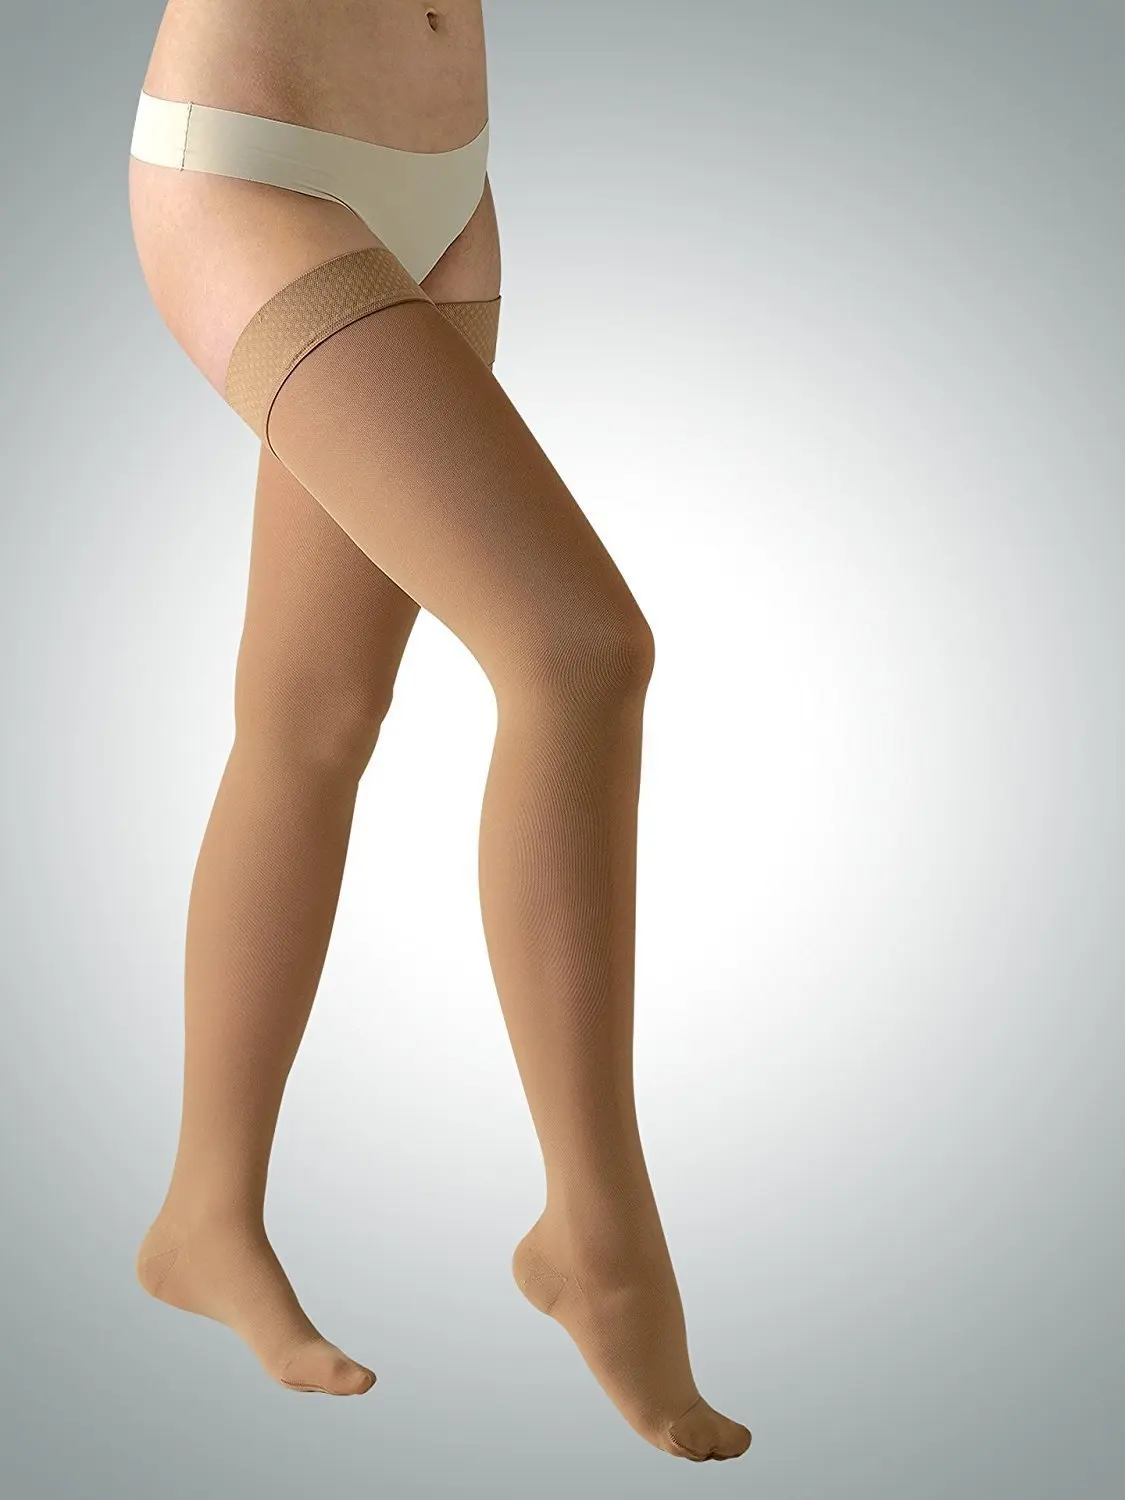 compression stockings for men measurements